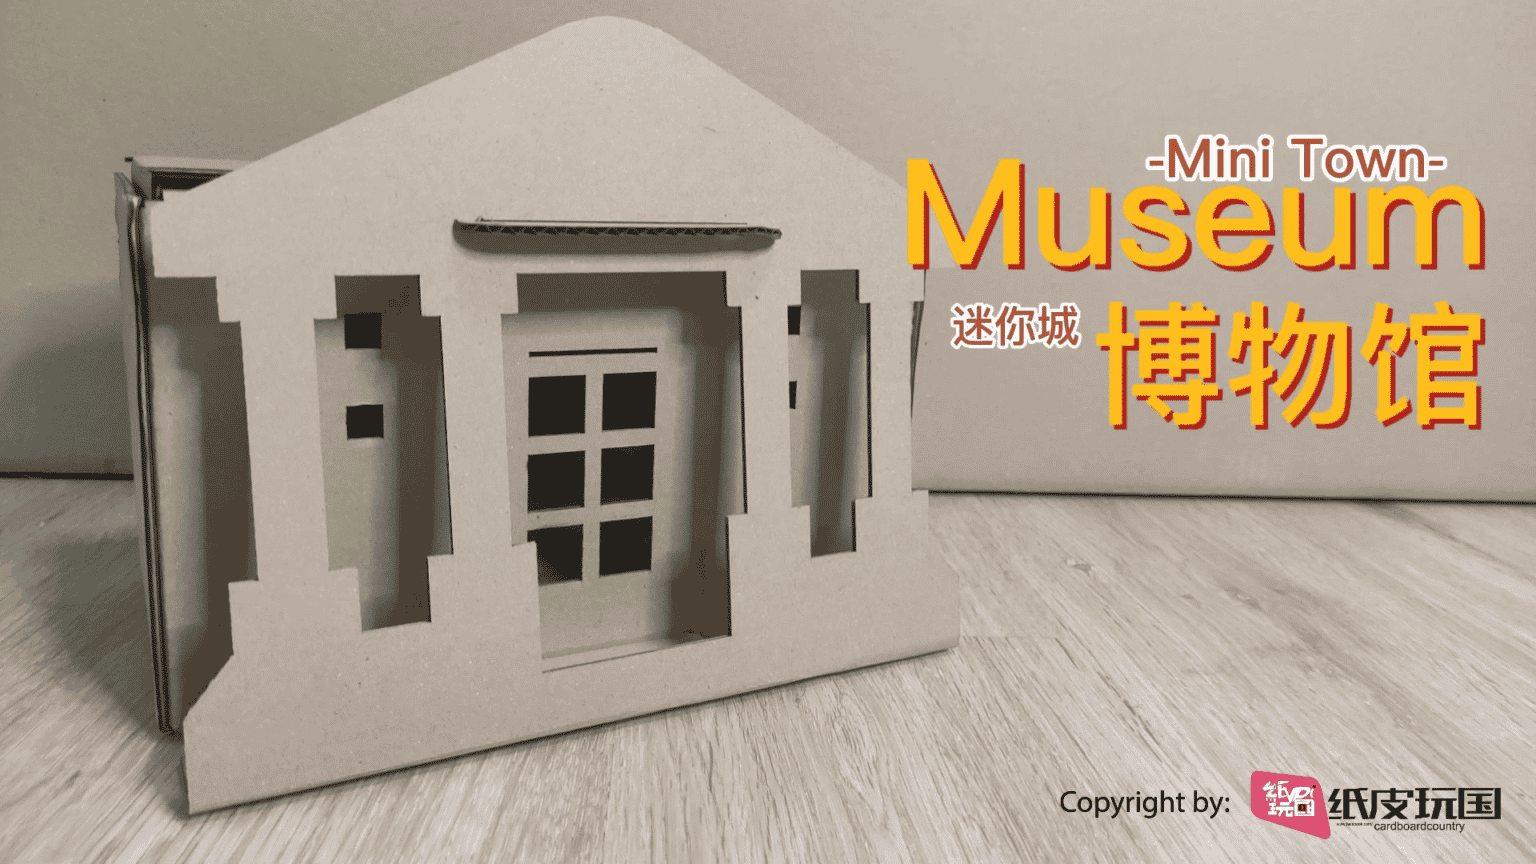 (215) Mini Town_Museum 迷你城_博物馆 - YouTube